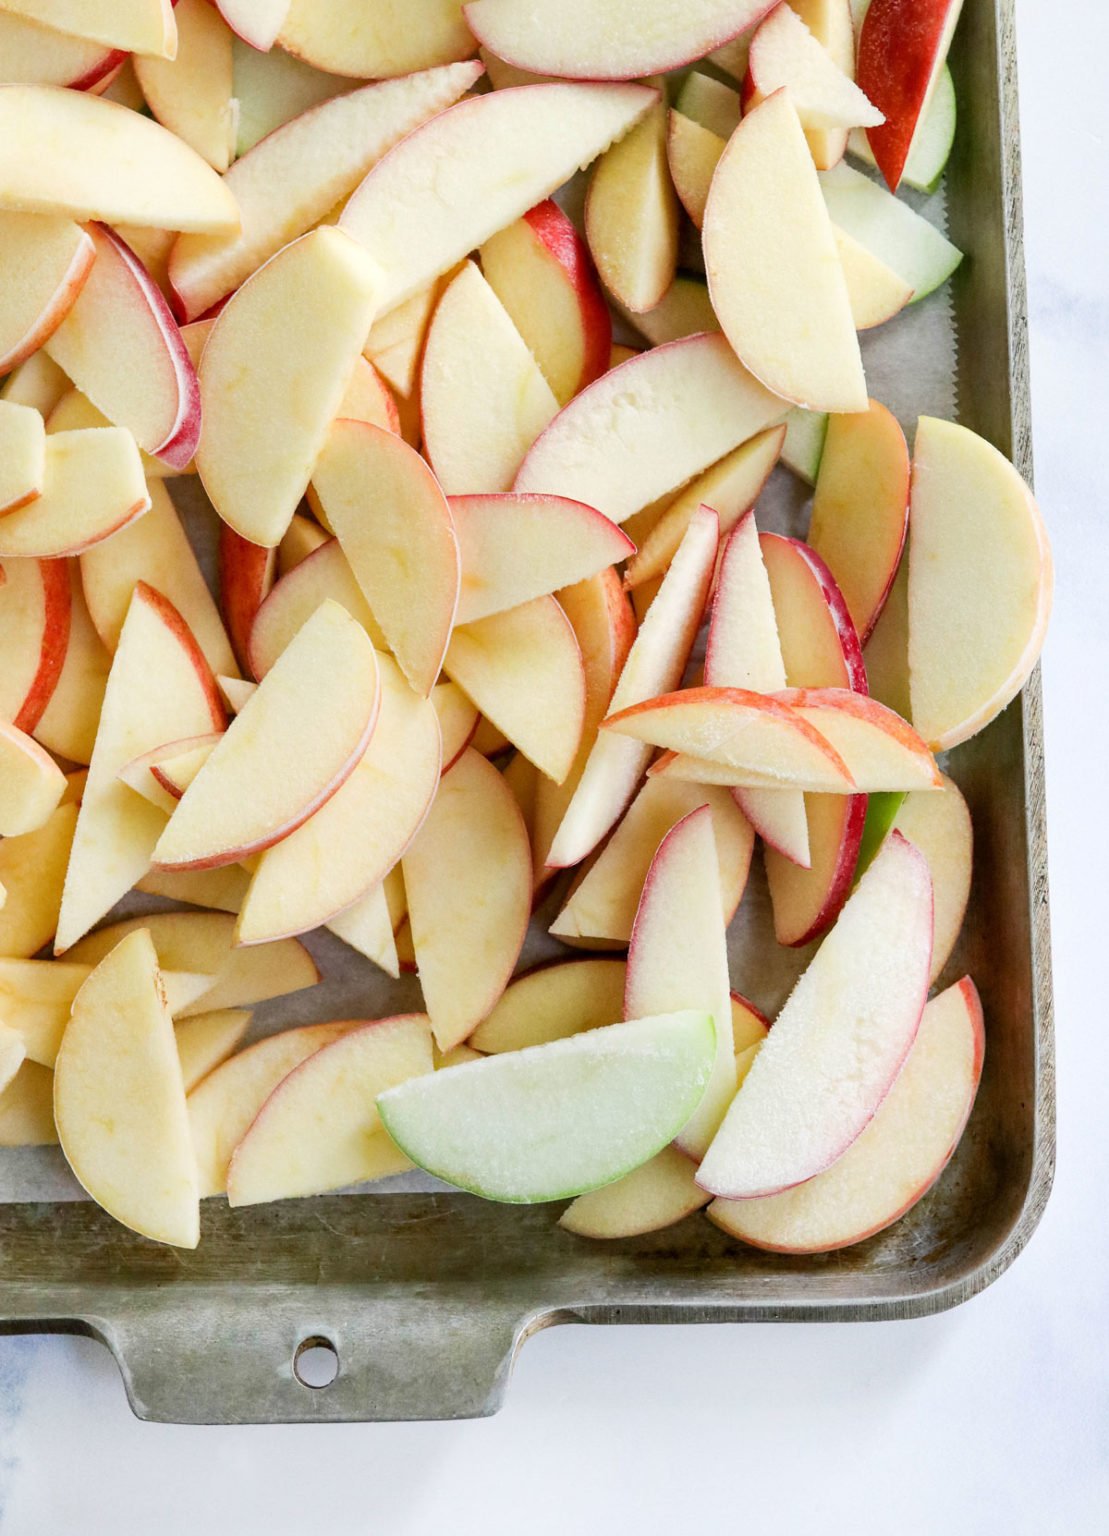 Frozen Apples On Pan 1109x1536 